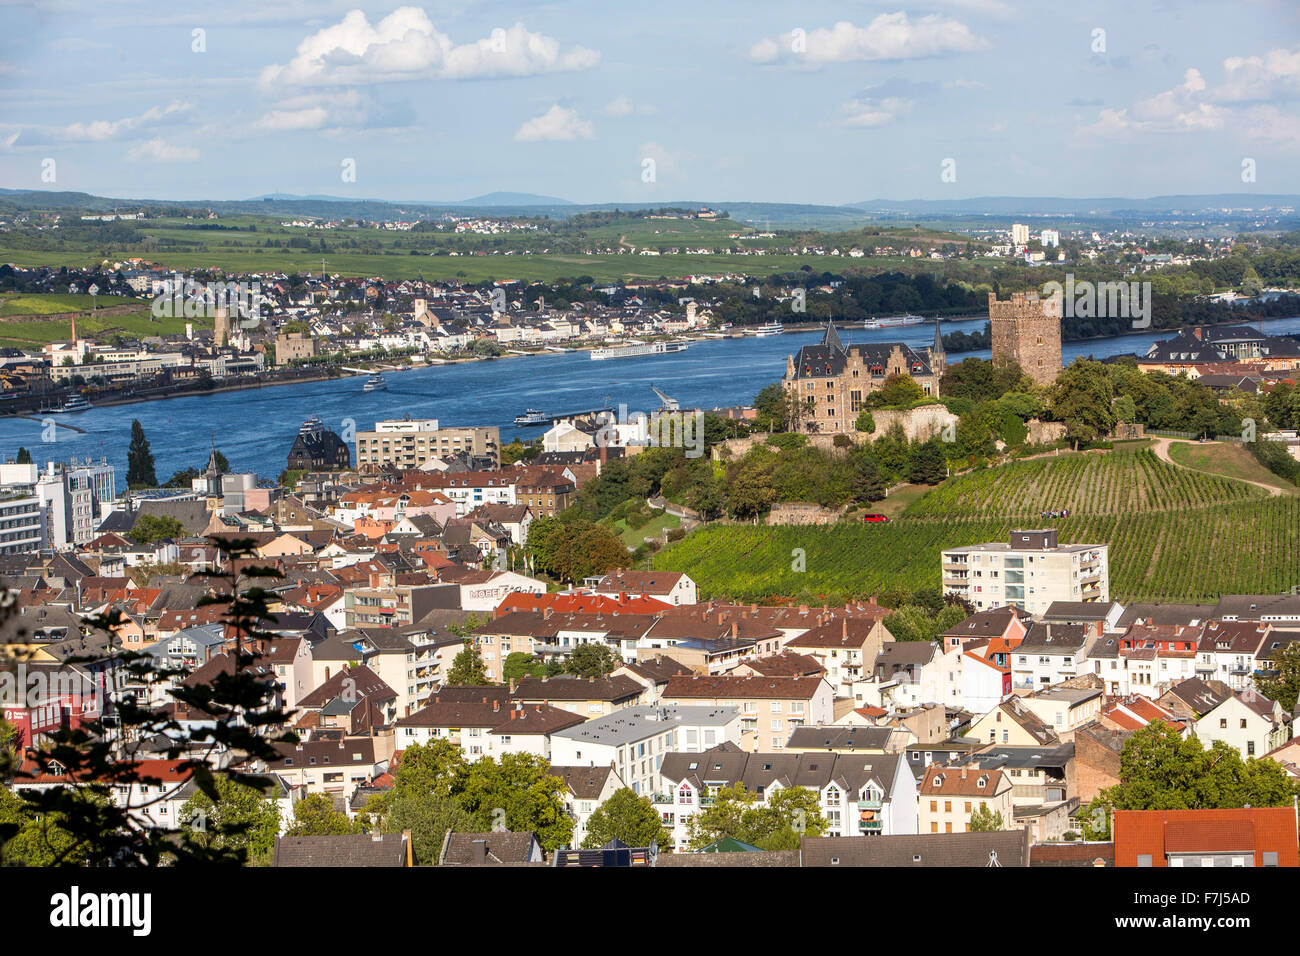 City of Bingen, upper middle Rhine valley, Germany, Klopp castle, Stock Photo